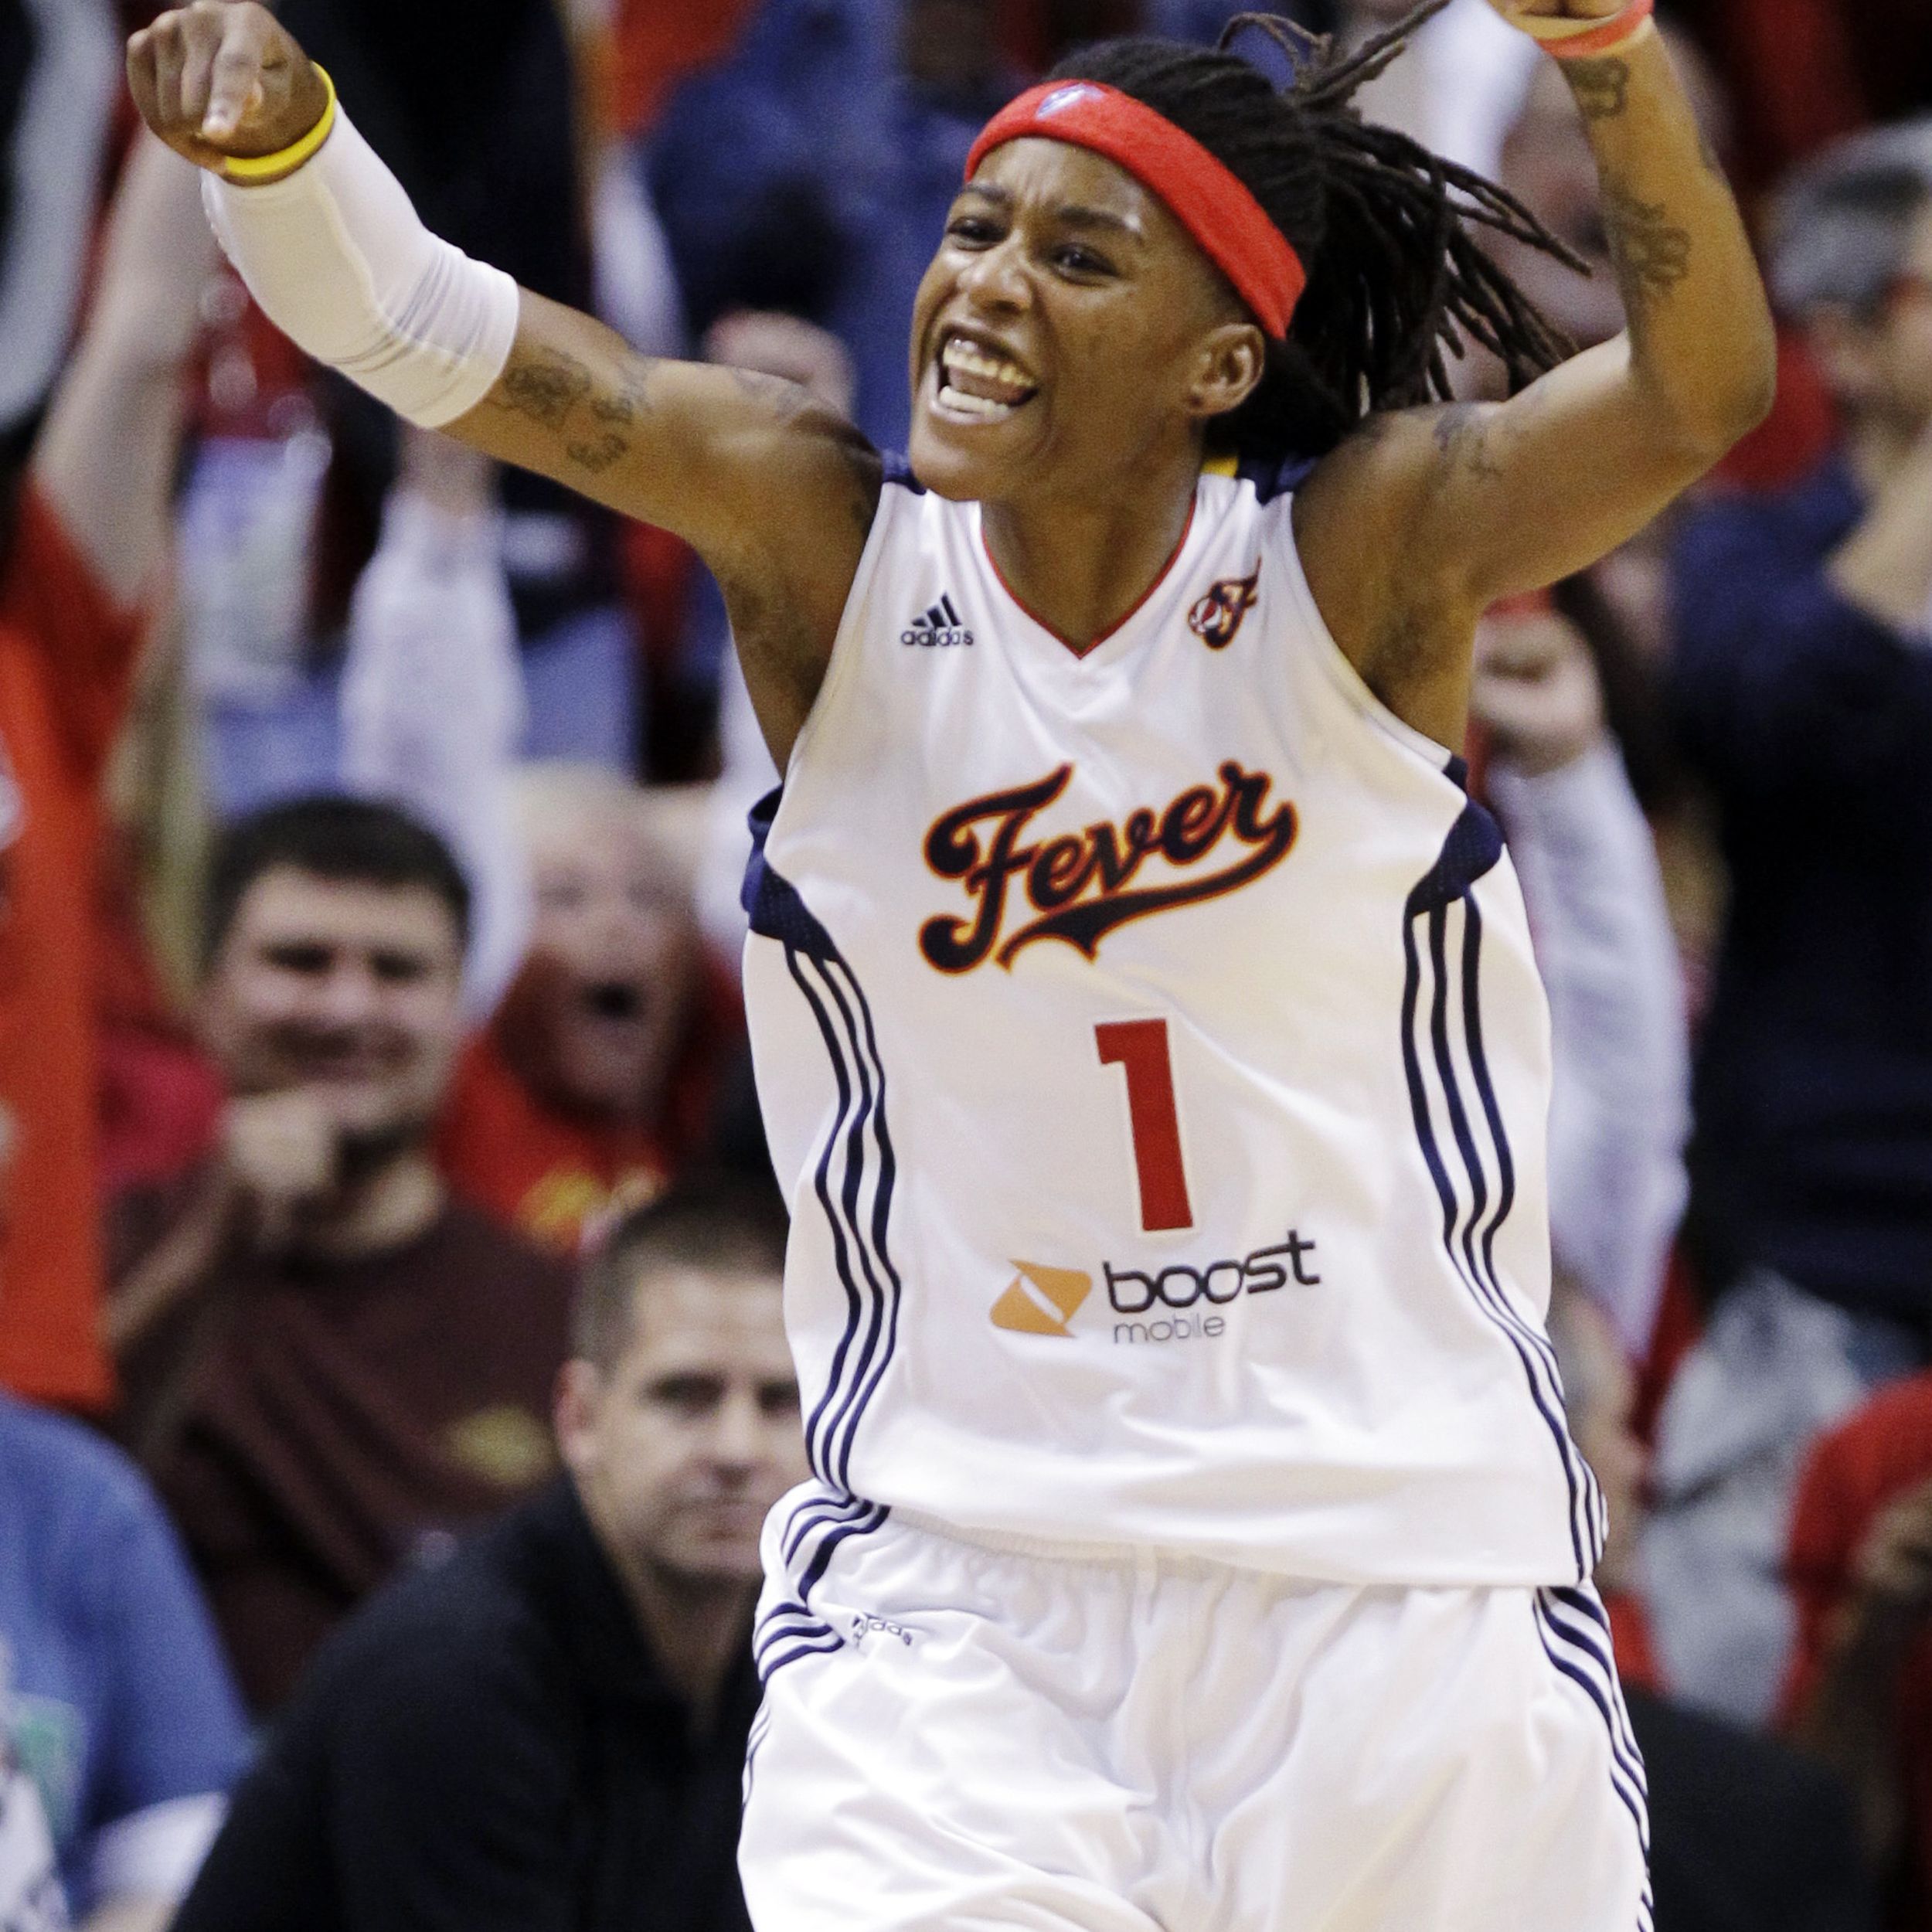 Tamika Catchings 2012 WNBA Indiana Fever Champion MVP!